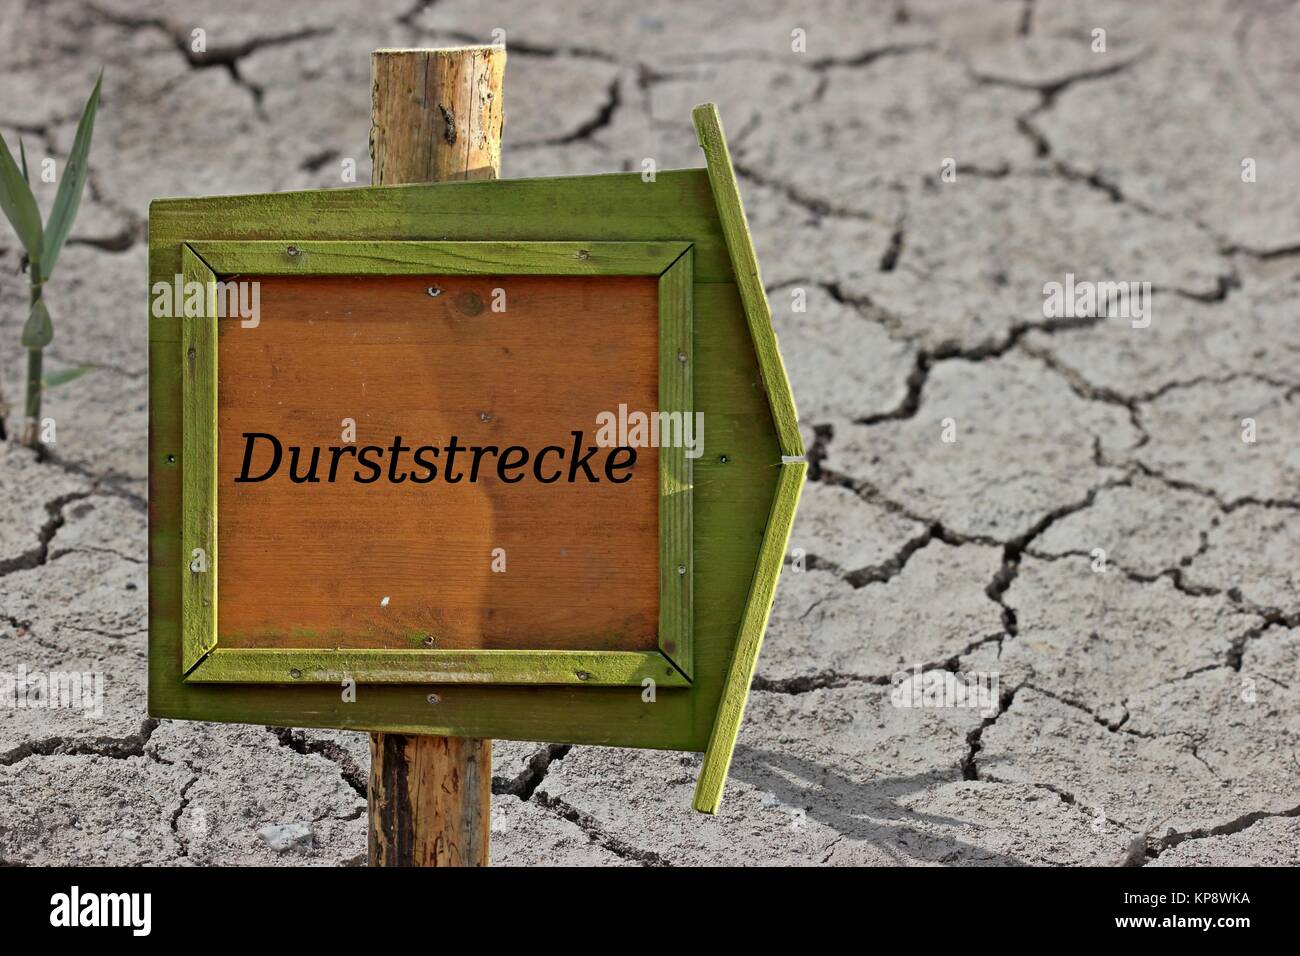 Durststrecke Stock Photo